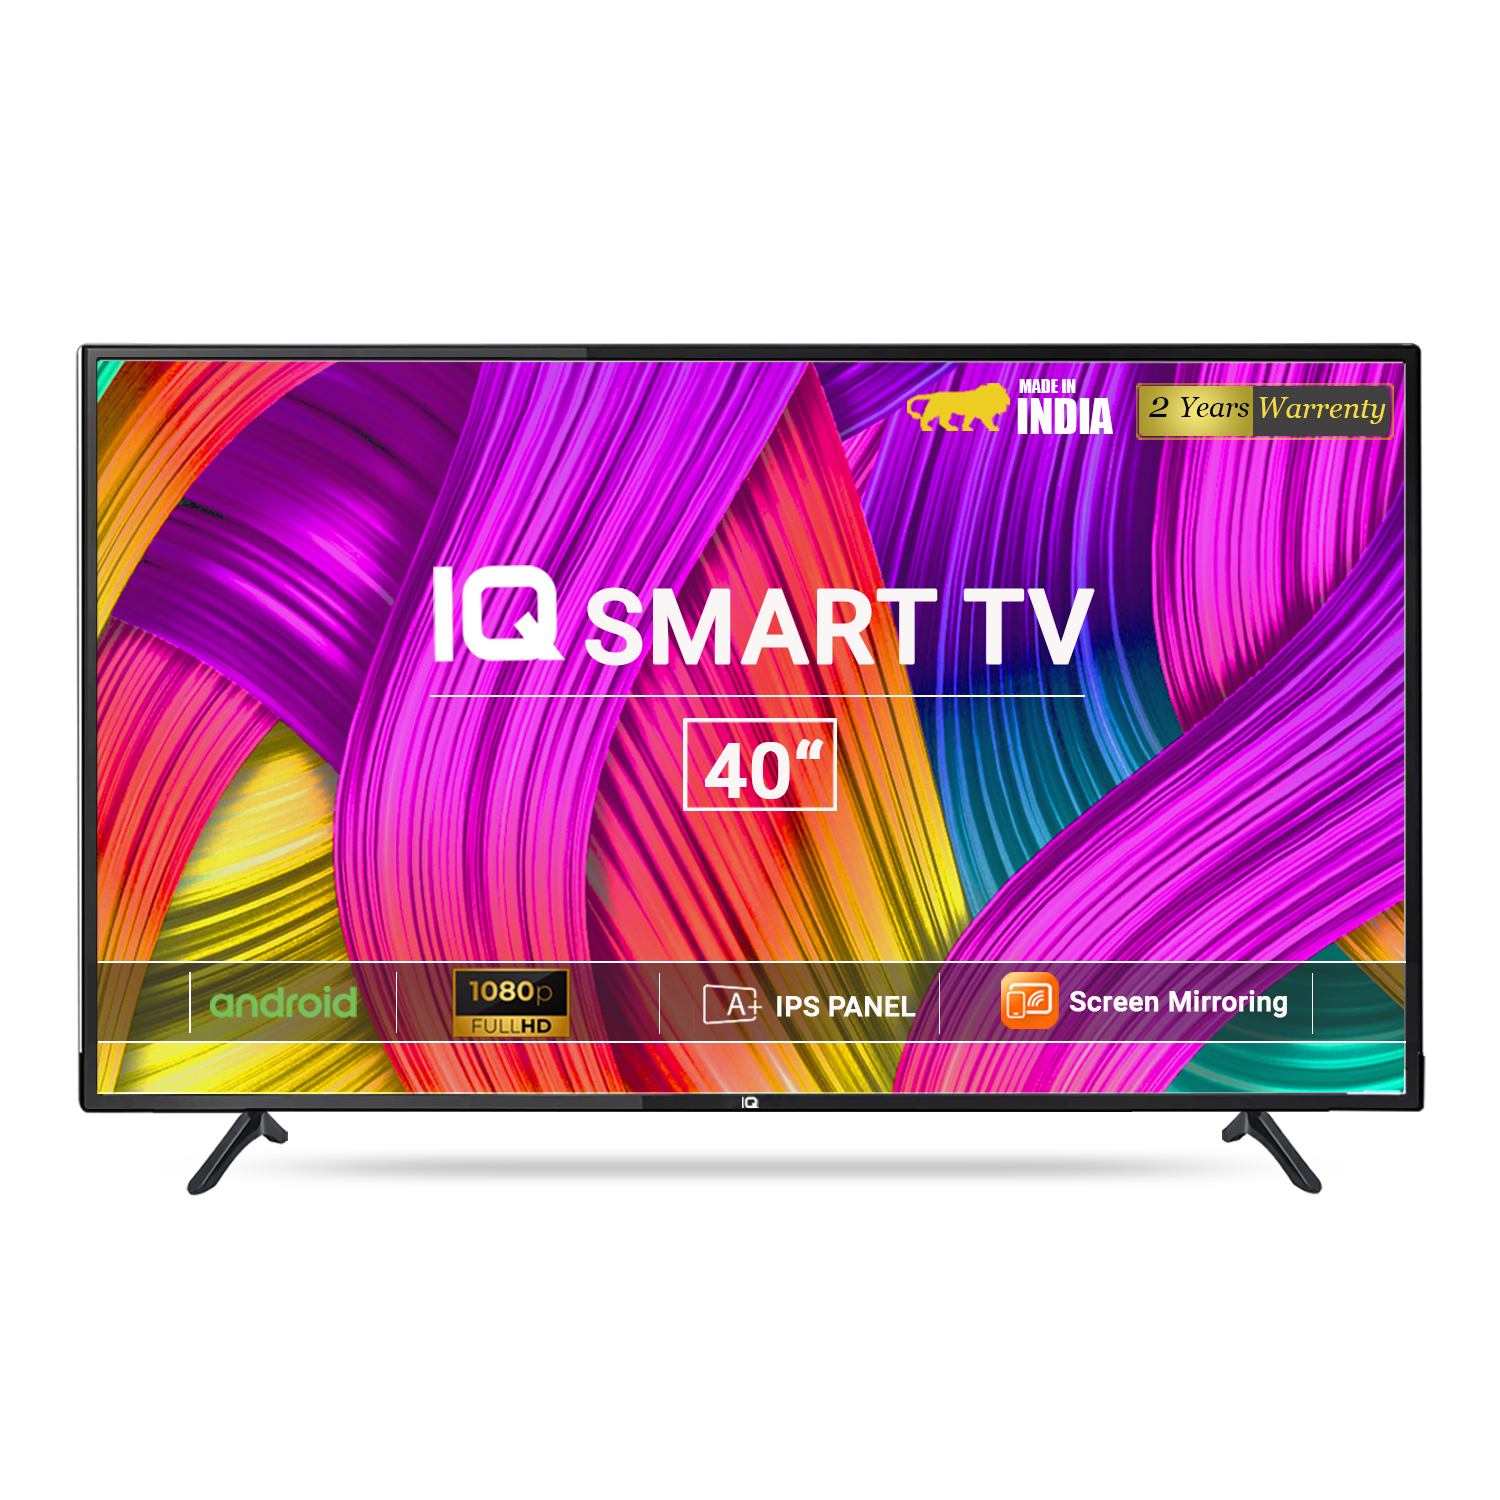 IQ-40-Inches-Smart-LED-TV